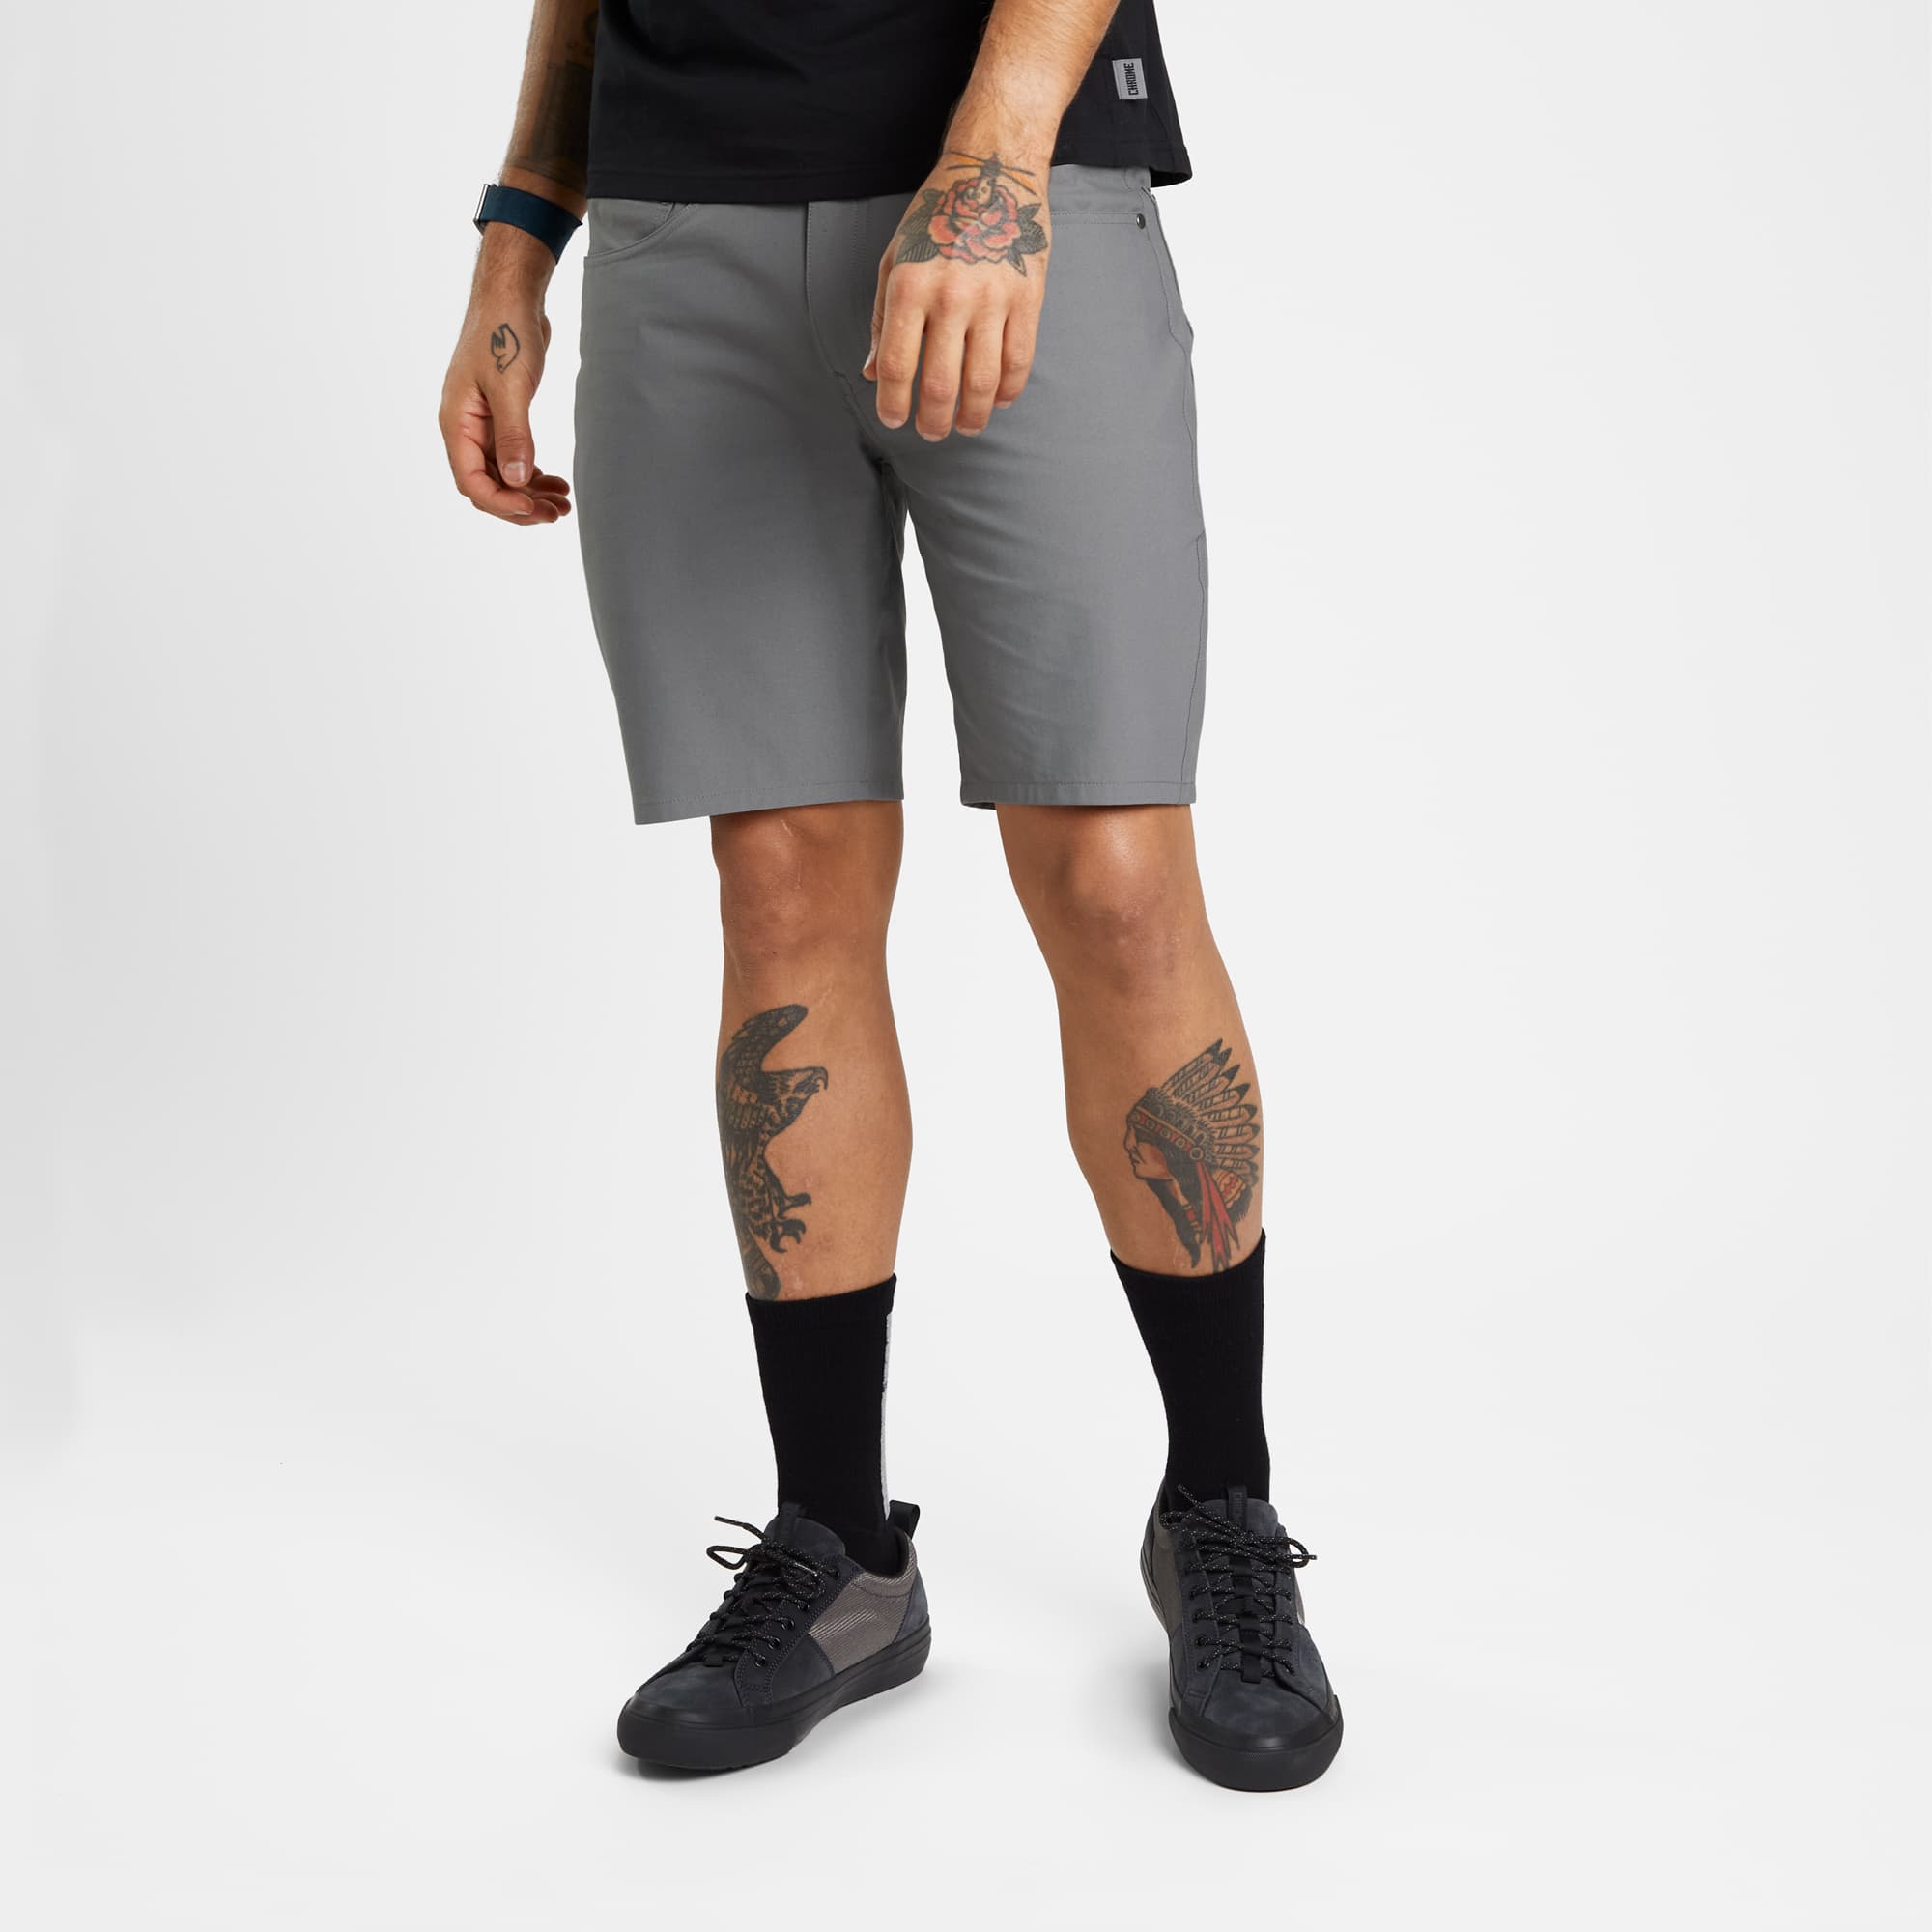 Men's Madrona tech 5-pocket short in grey worn by a man #color_castle rock